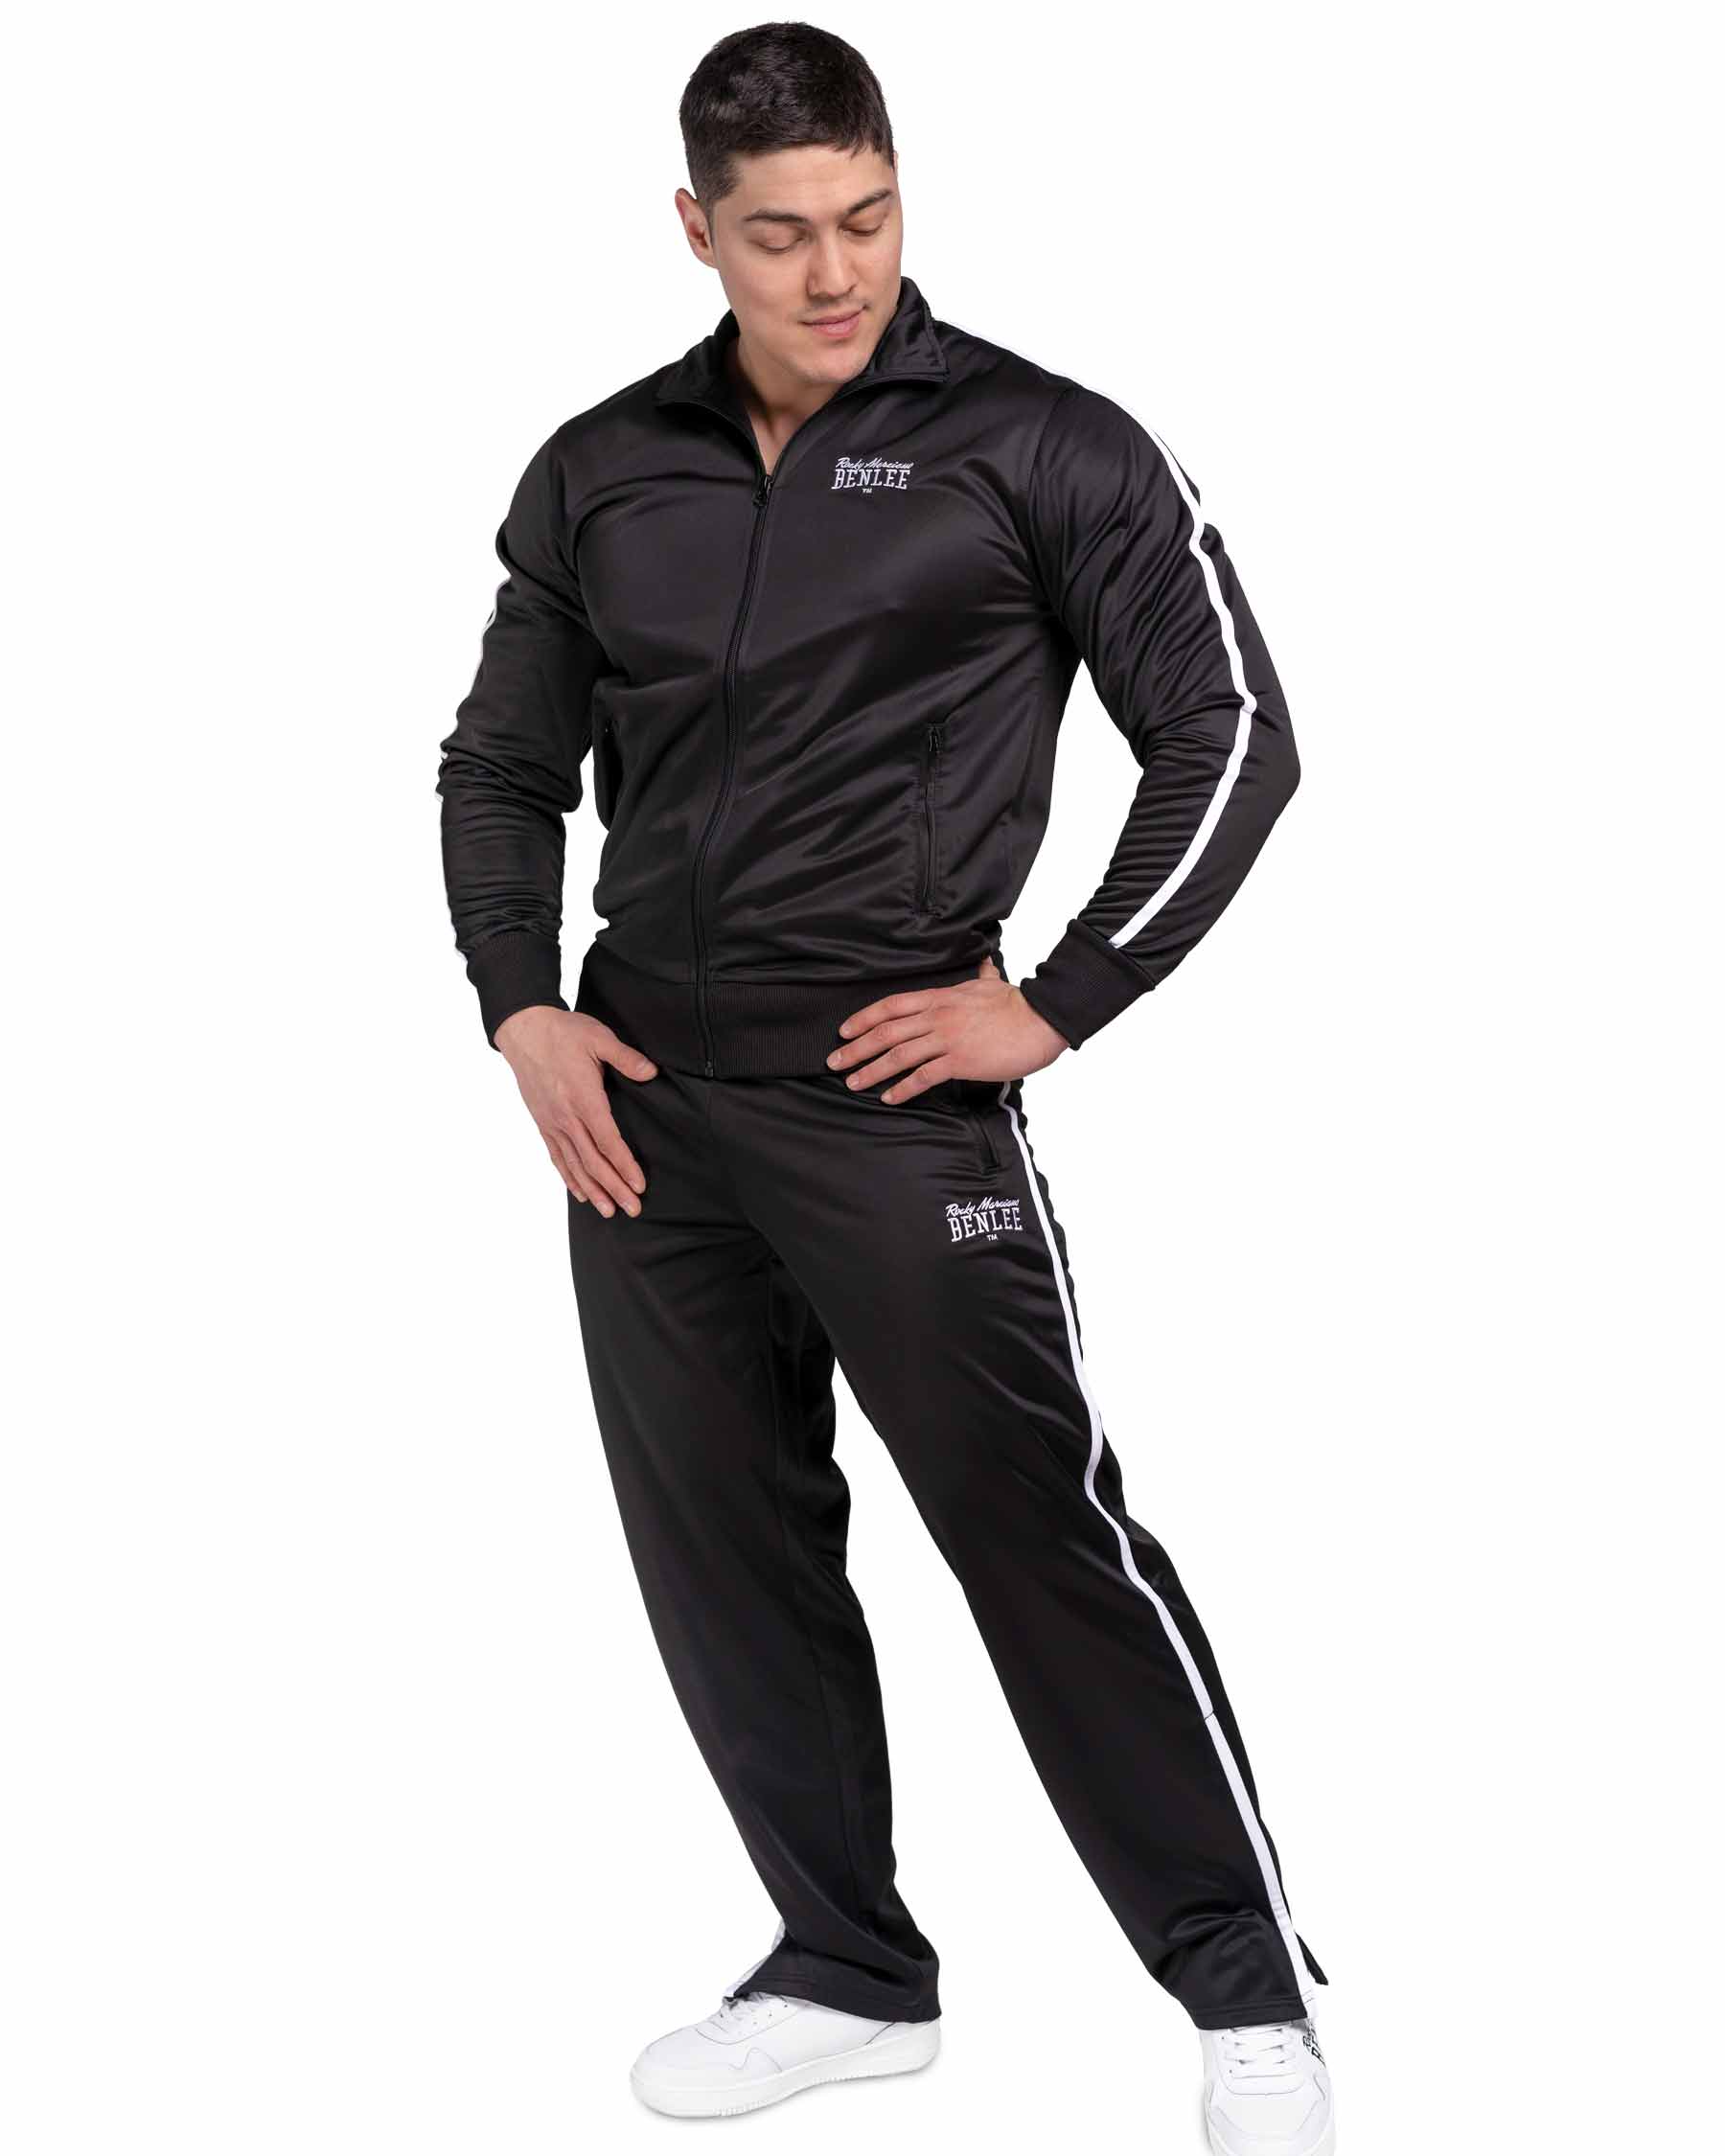 BenLee traningsuit Club Sport - Mens Pants - BenLee sportswear and boxing  equipment